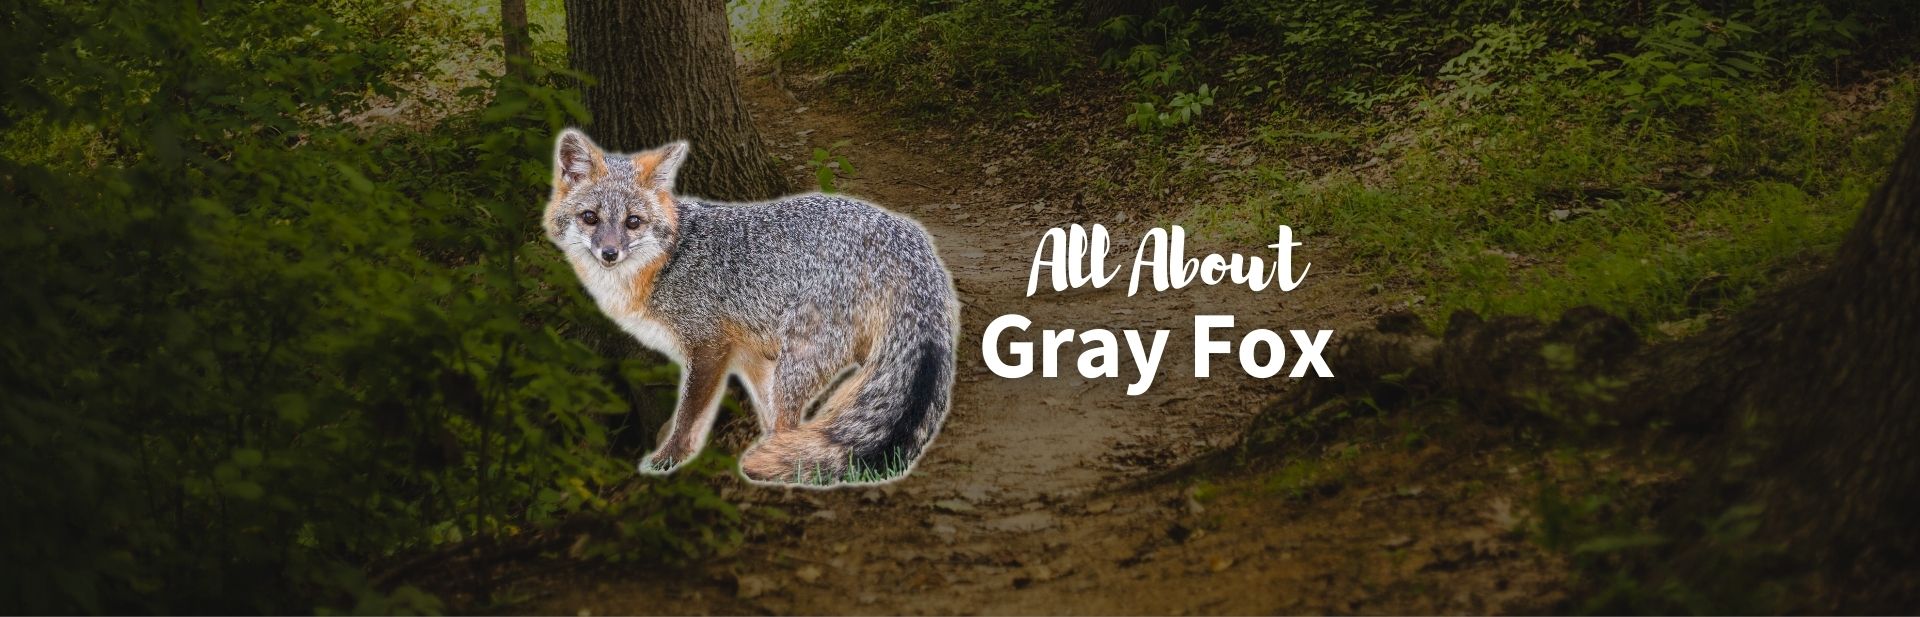 Gray Fox: The Elusive Tree Foxes of North America